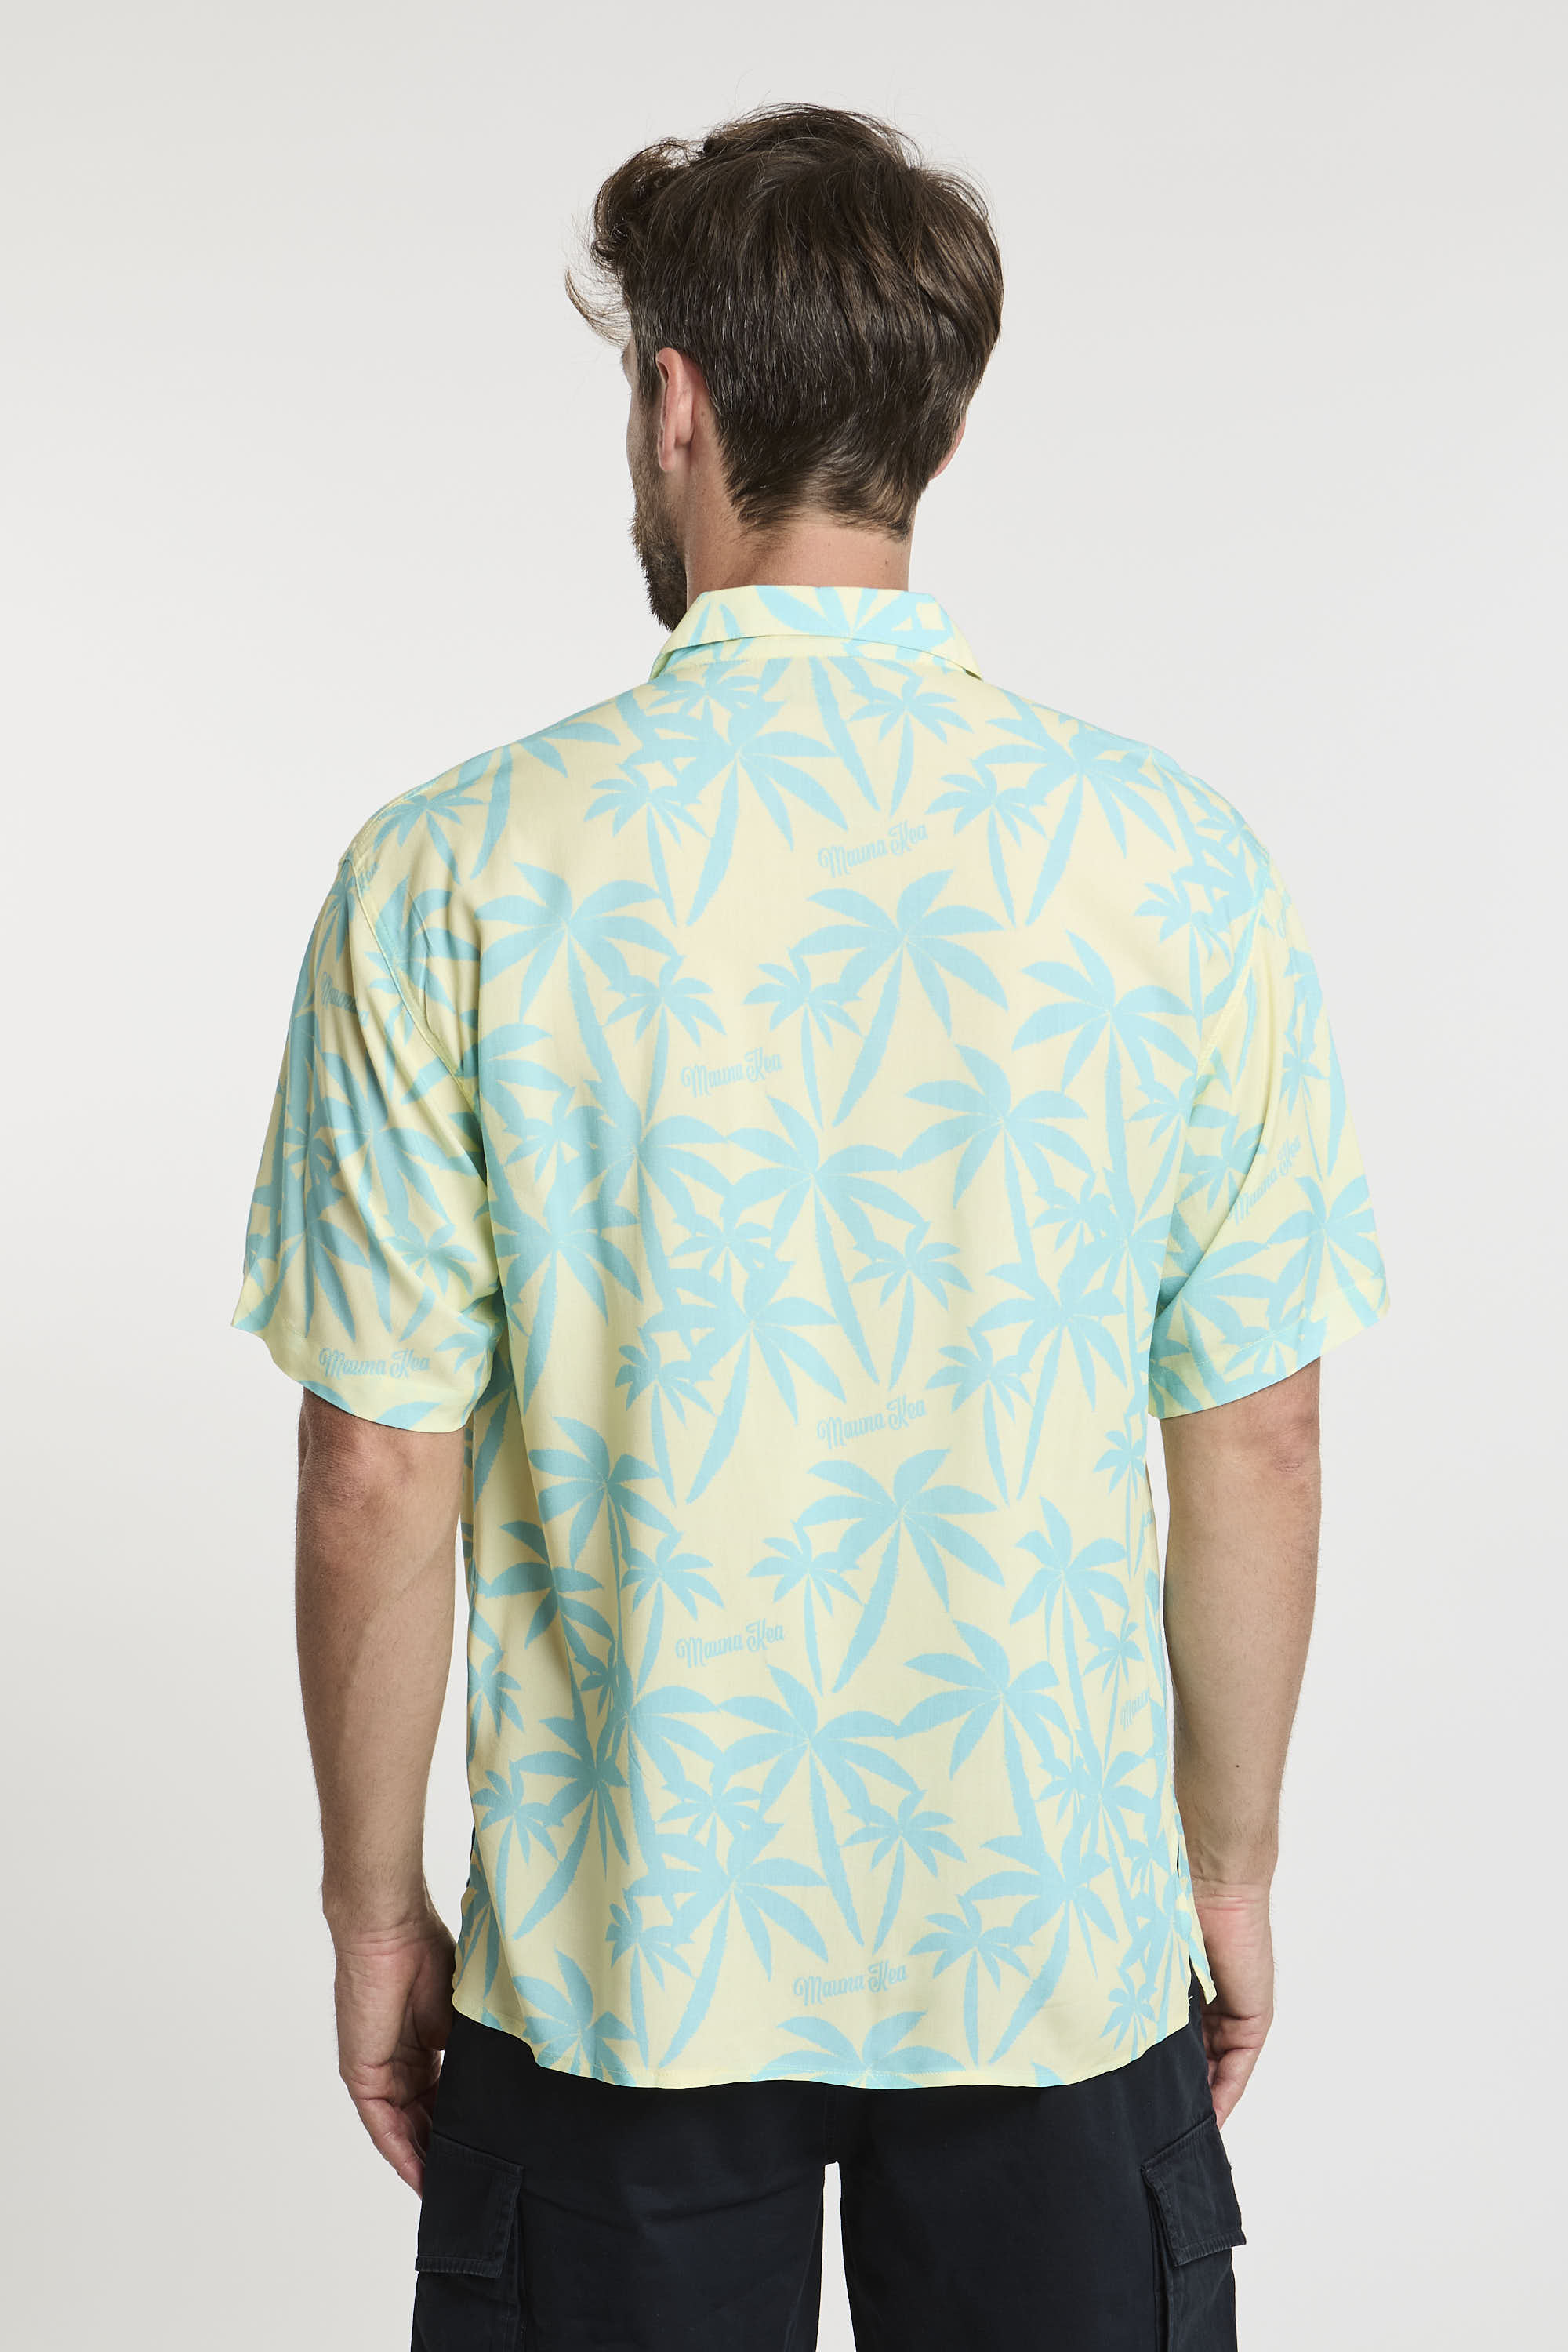 Mauna Kea Printed All Over Viscose Shirt in Yellow-6